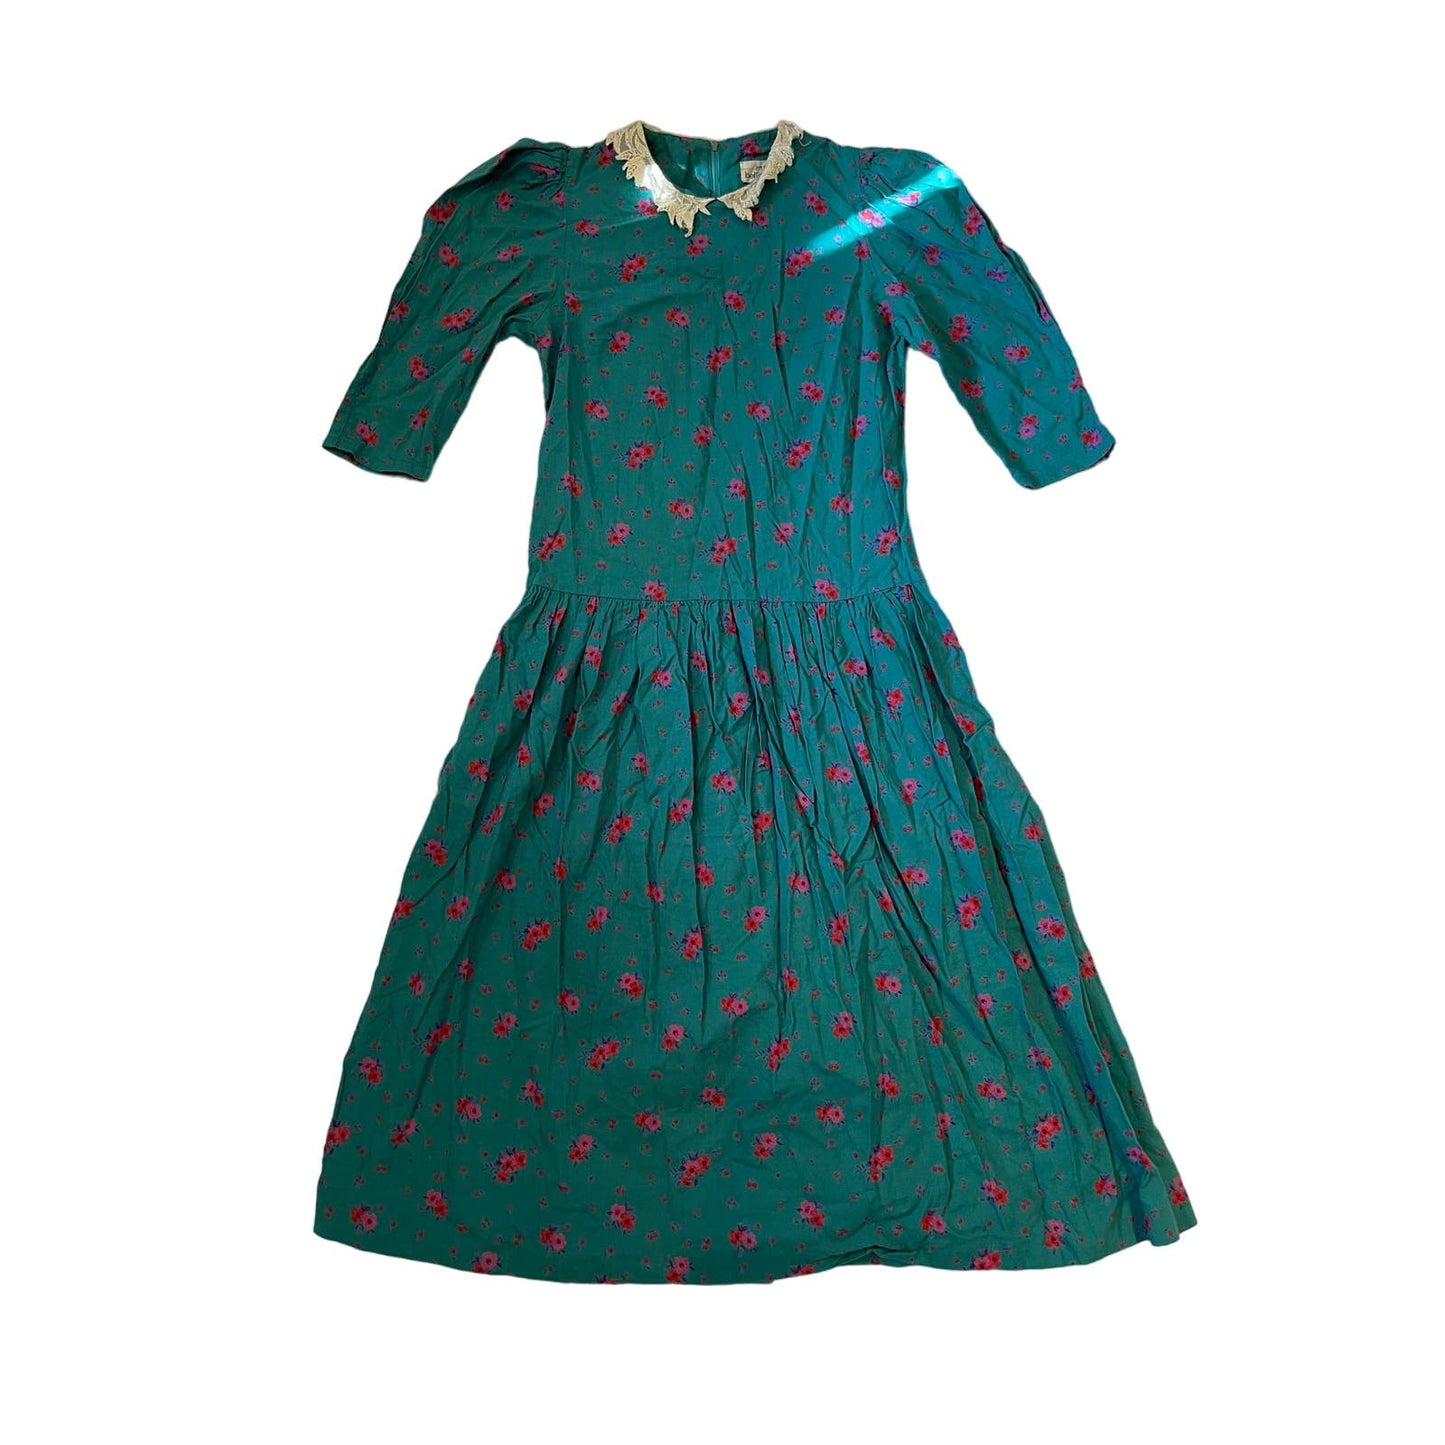 Jane Schaffhausen for Belle France Vintage Green Prairie Dress Size Small